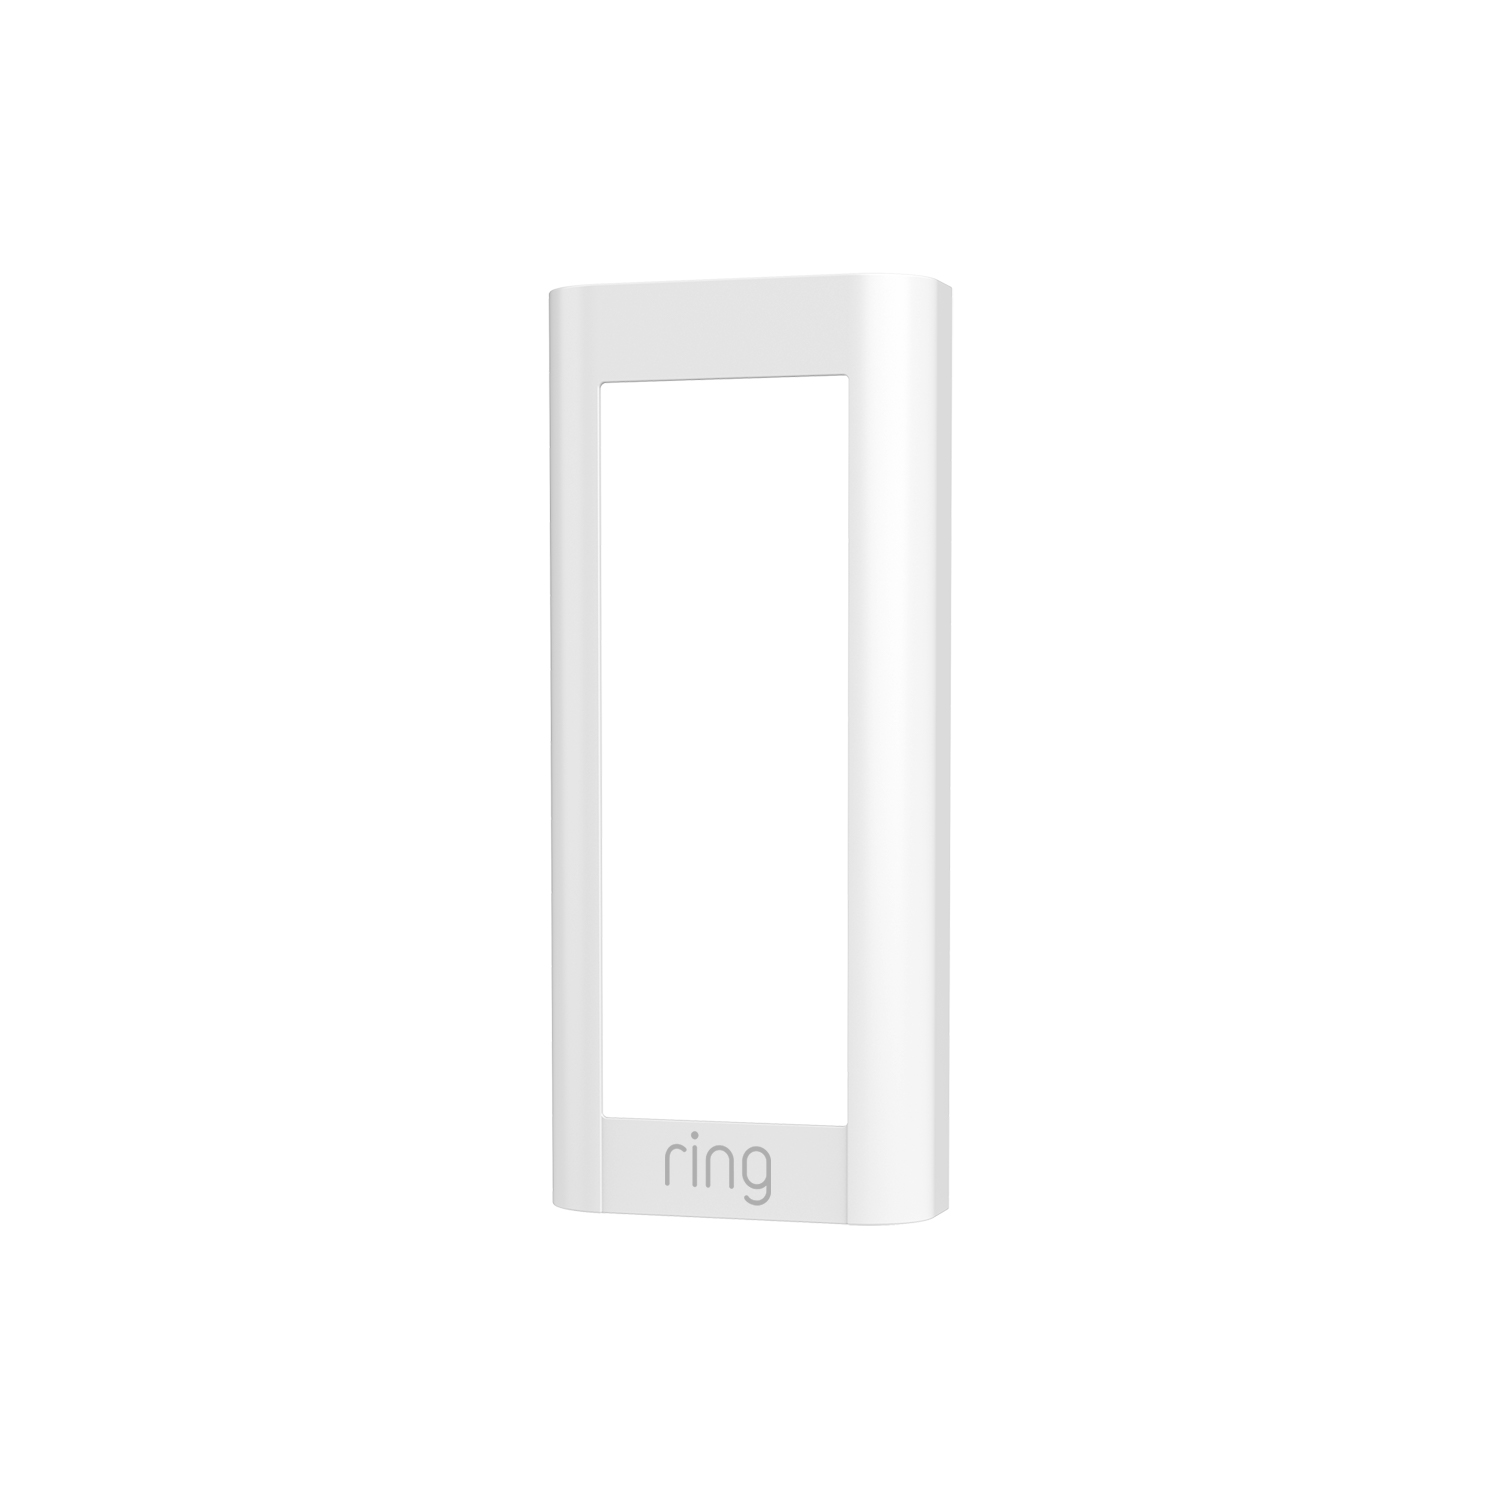 Interchangeable Faceplate (for Wired Video Doorbell Pro (Video Doorbell Pro 2)) - White